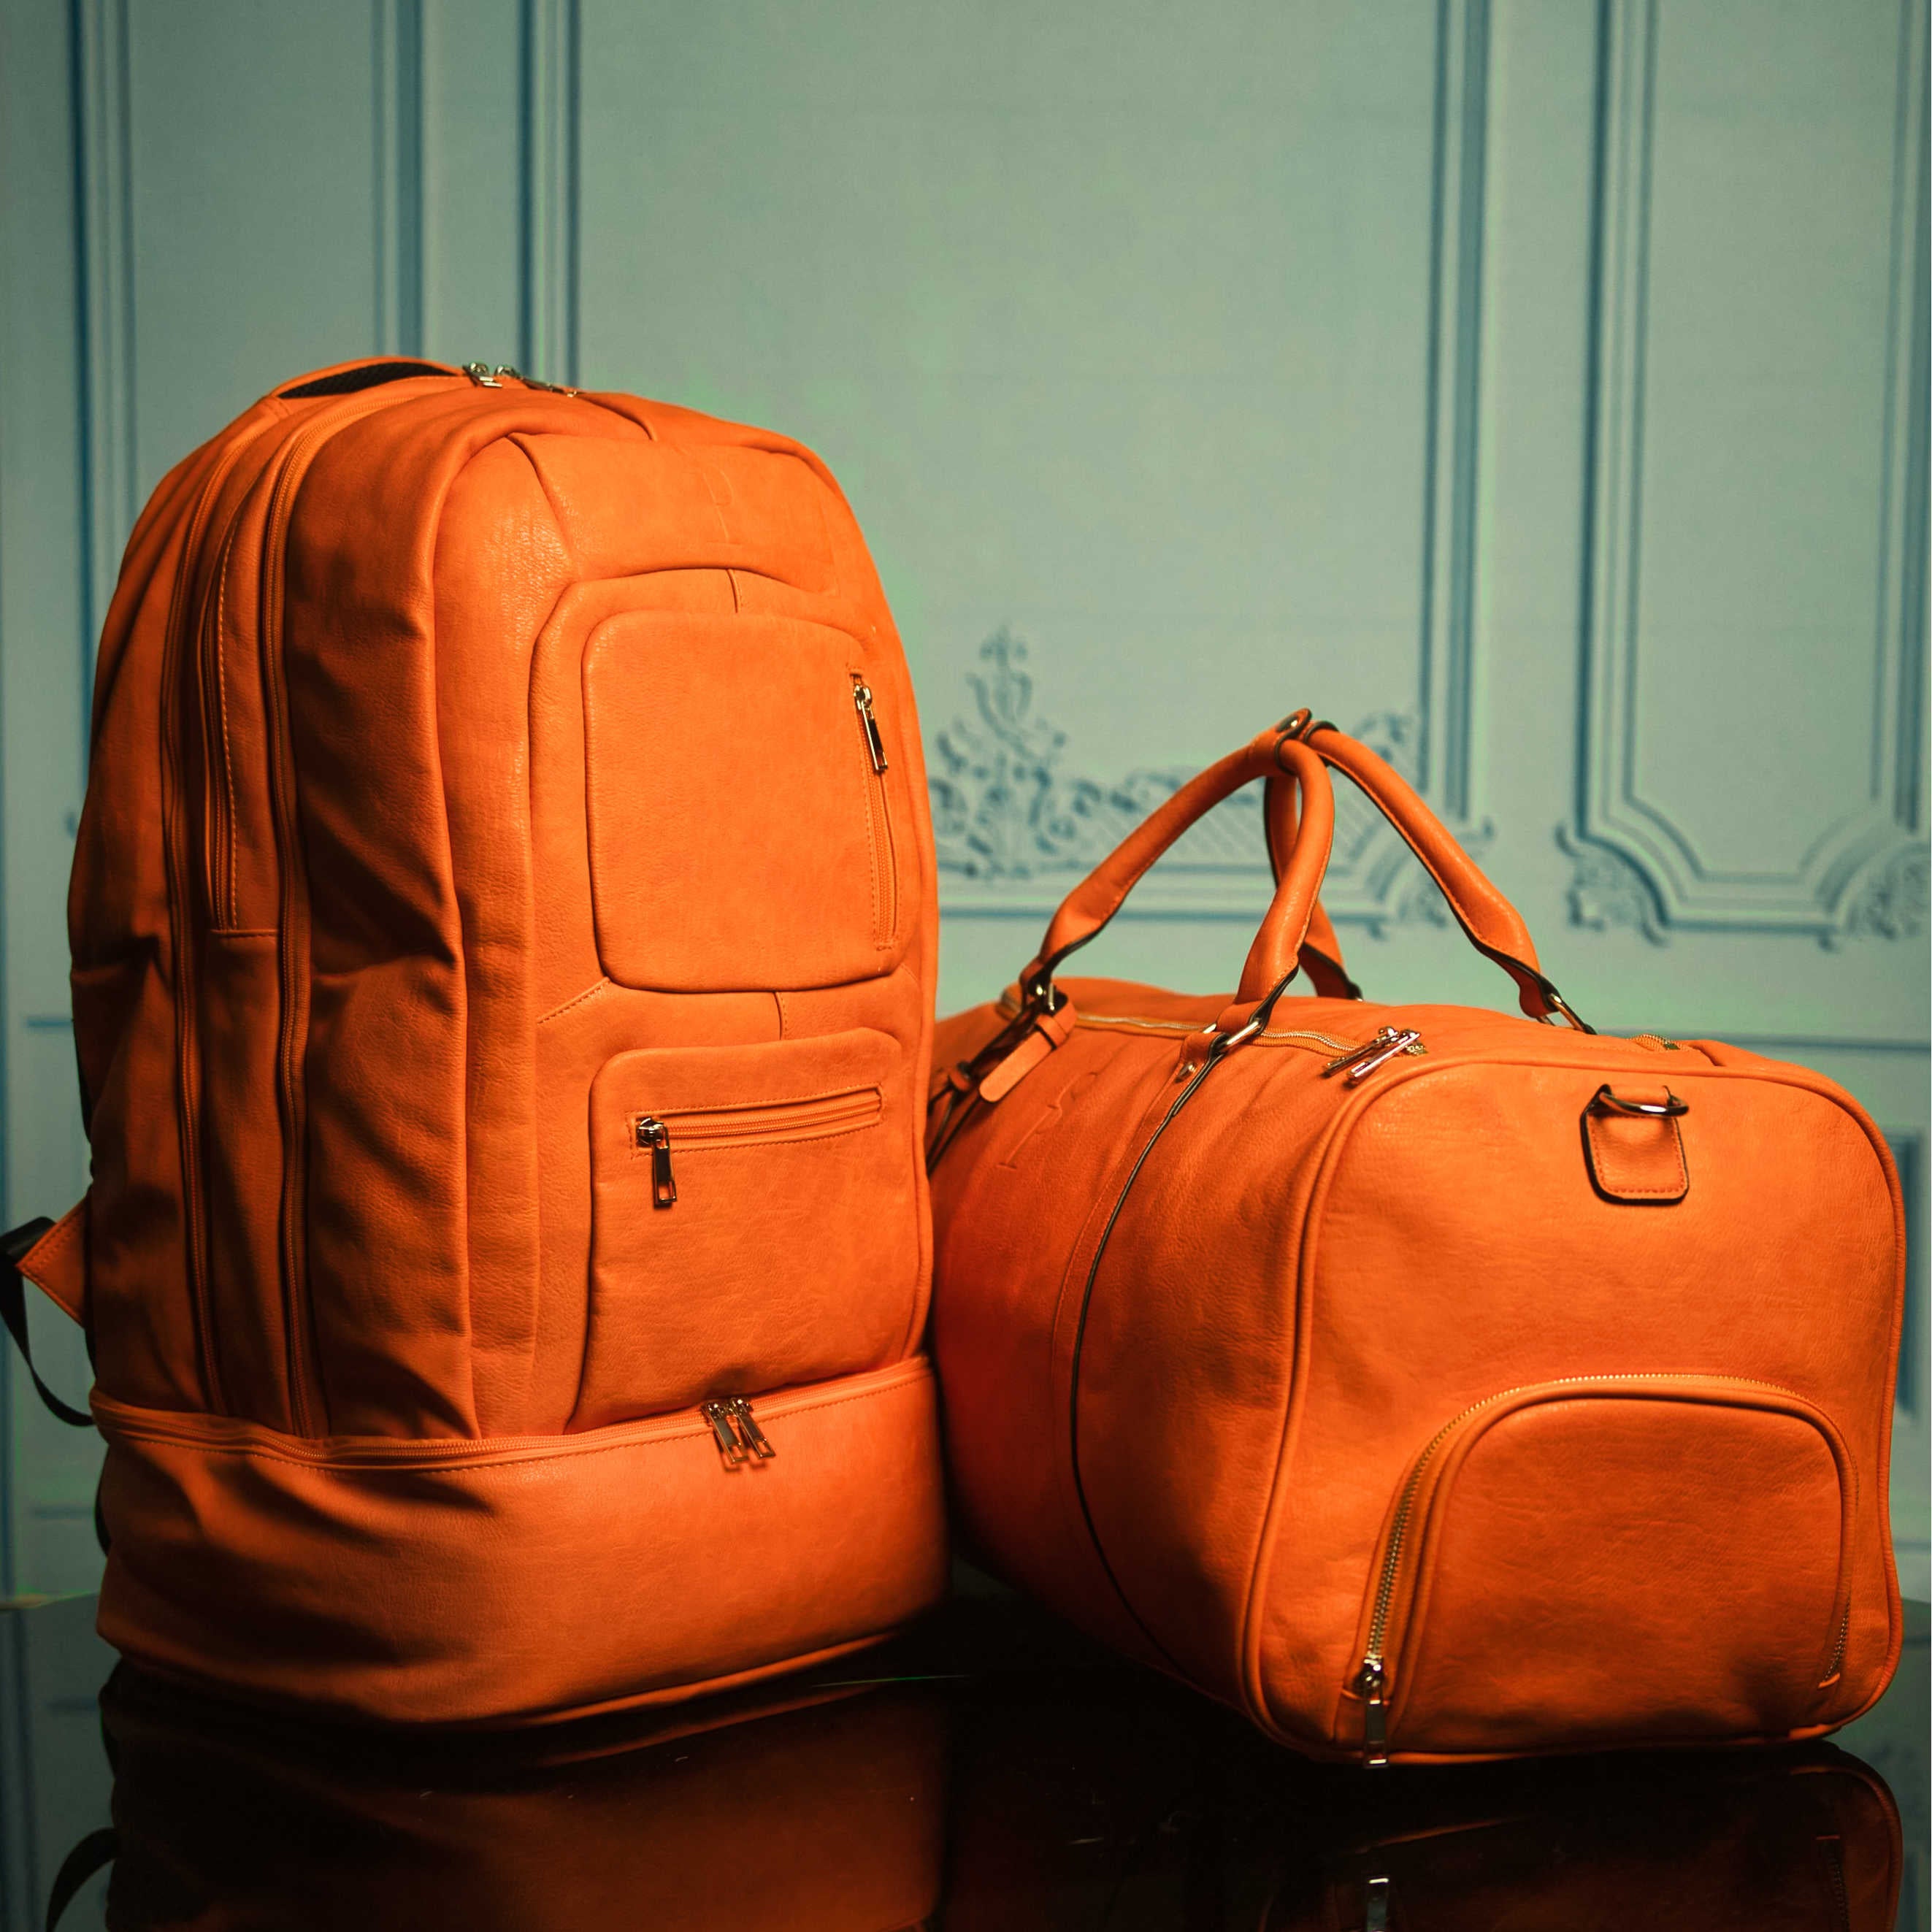 Orange Tumbled Leather Duffle Bag